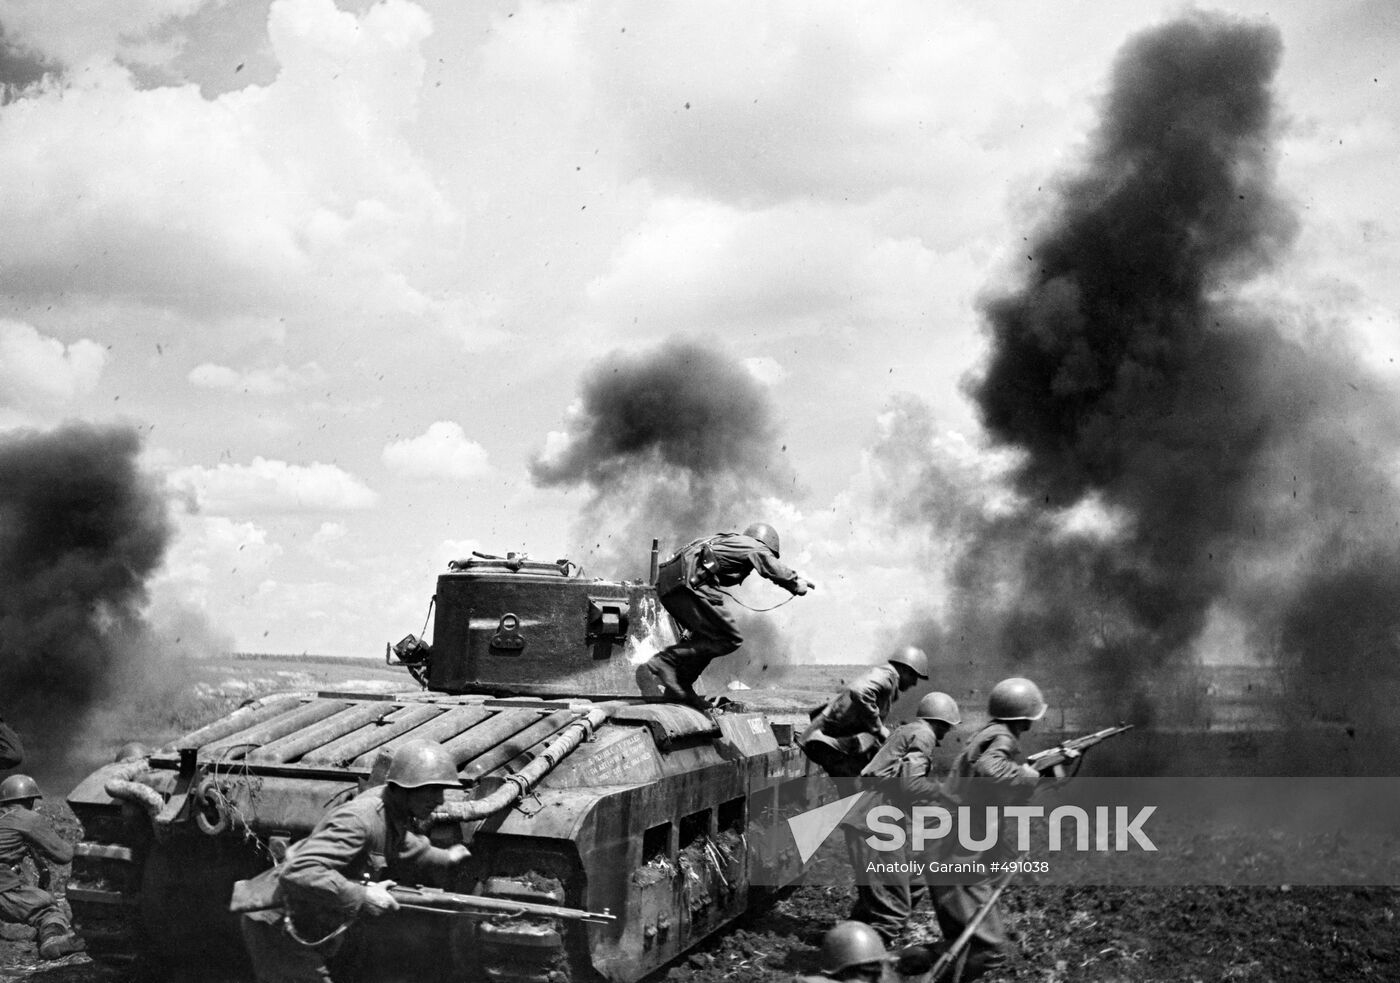 The 1941-1945 Great Patriotic War